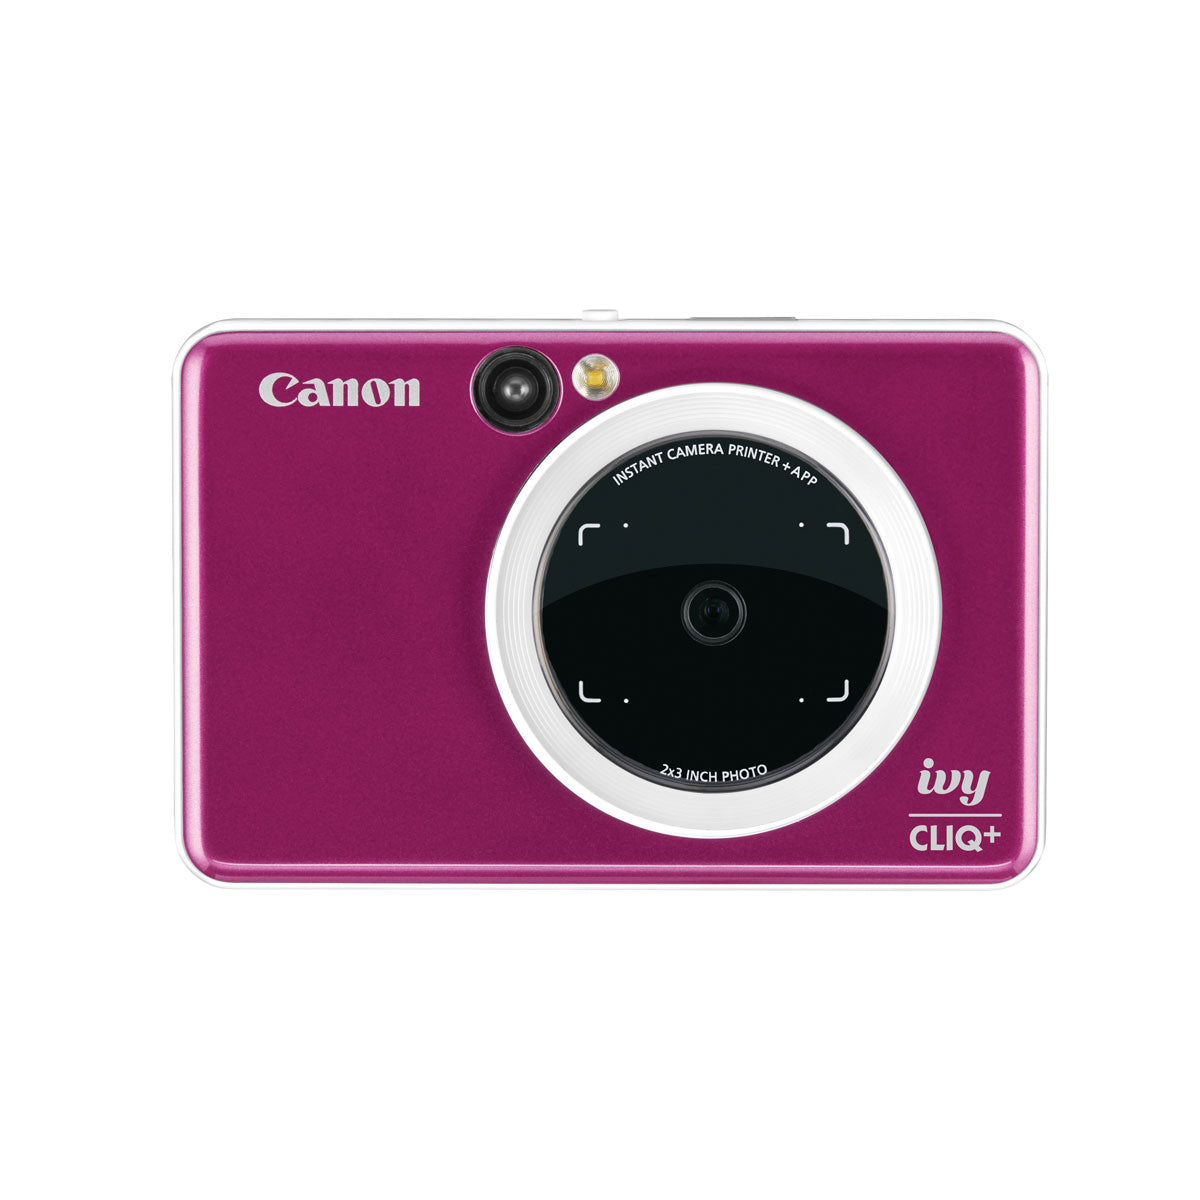 Canon IVY Cliq+ Instant Camera Printer (Ruby Red)